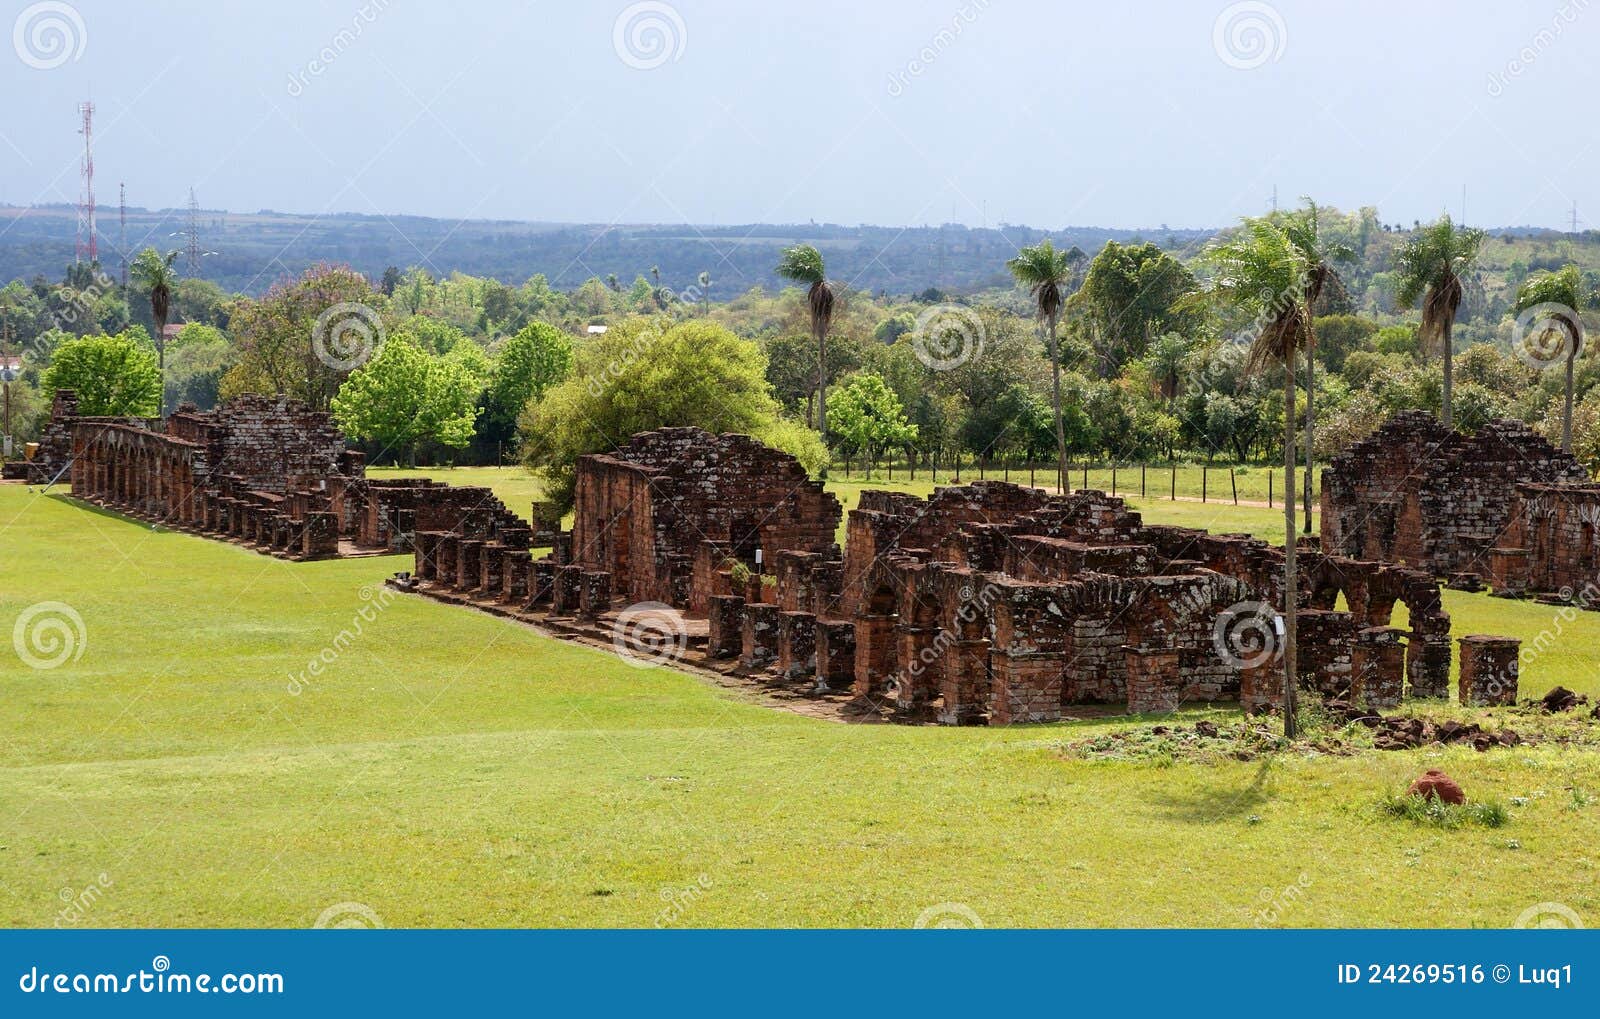 jesuit mission ruins in trinidad paraguay